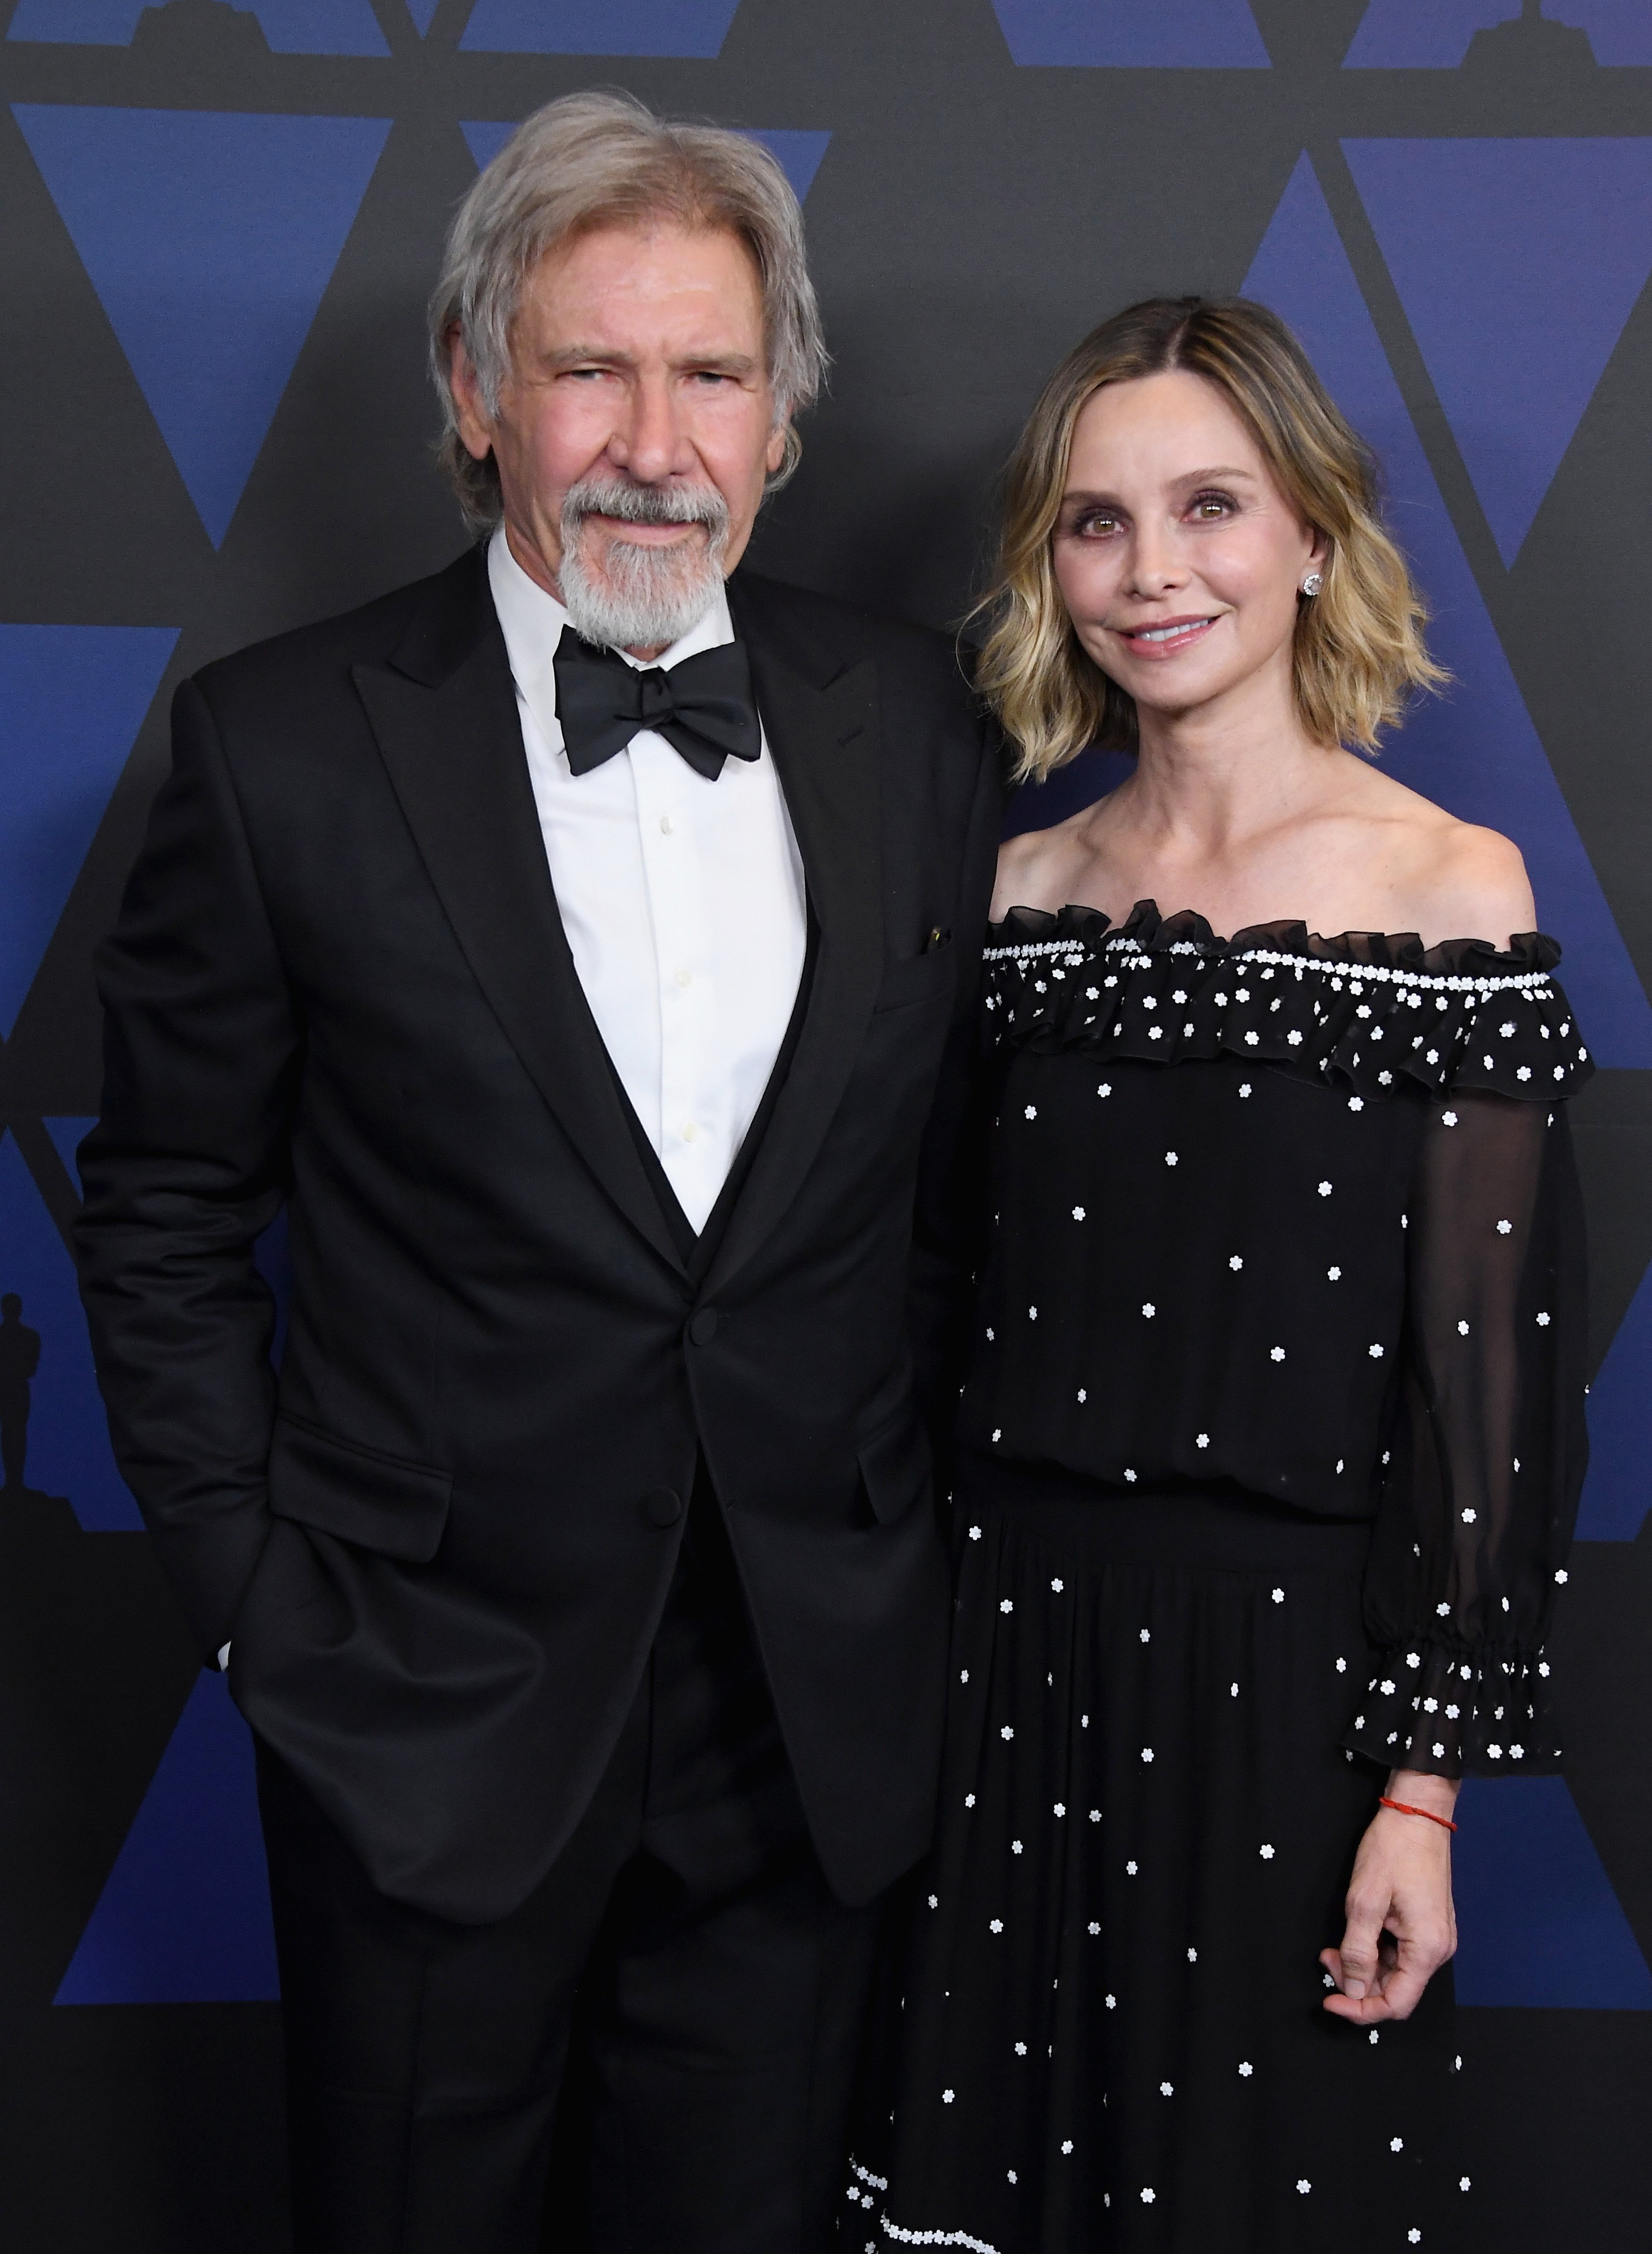 Harrison Ford und Calista Flockhart bei den 10. jährlichen Governors Awards der Academy of Motion Picture Arts and Sciences am 18. November 2018 in Hollywood, Kalifornien | Quelle: Getty Images